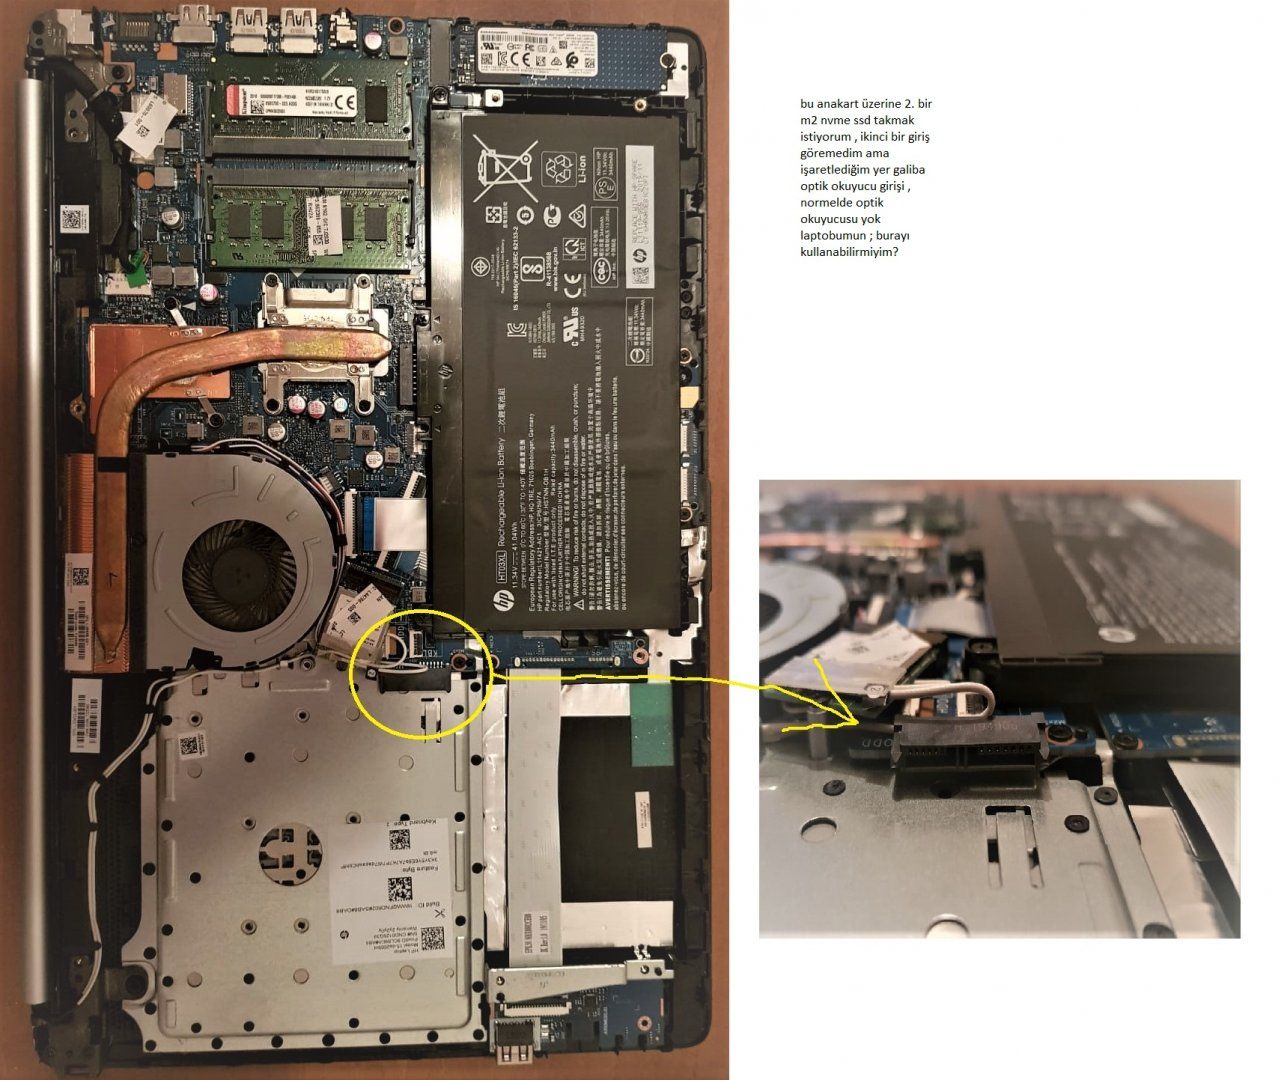 Çözüldü: HP Laptop'a NVMe M.2 SSD takma | Technopat Sosyal